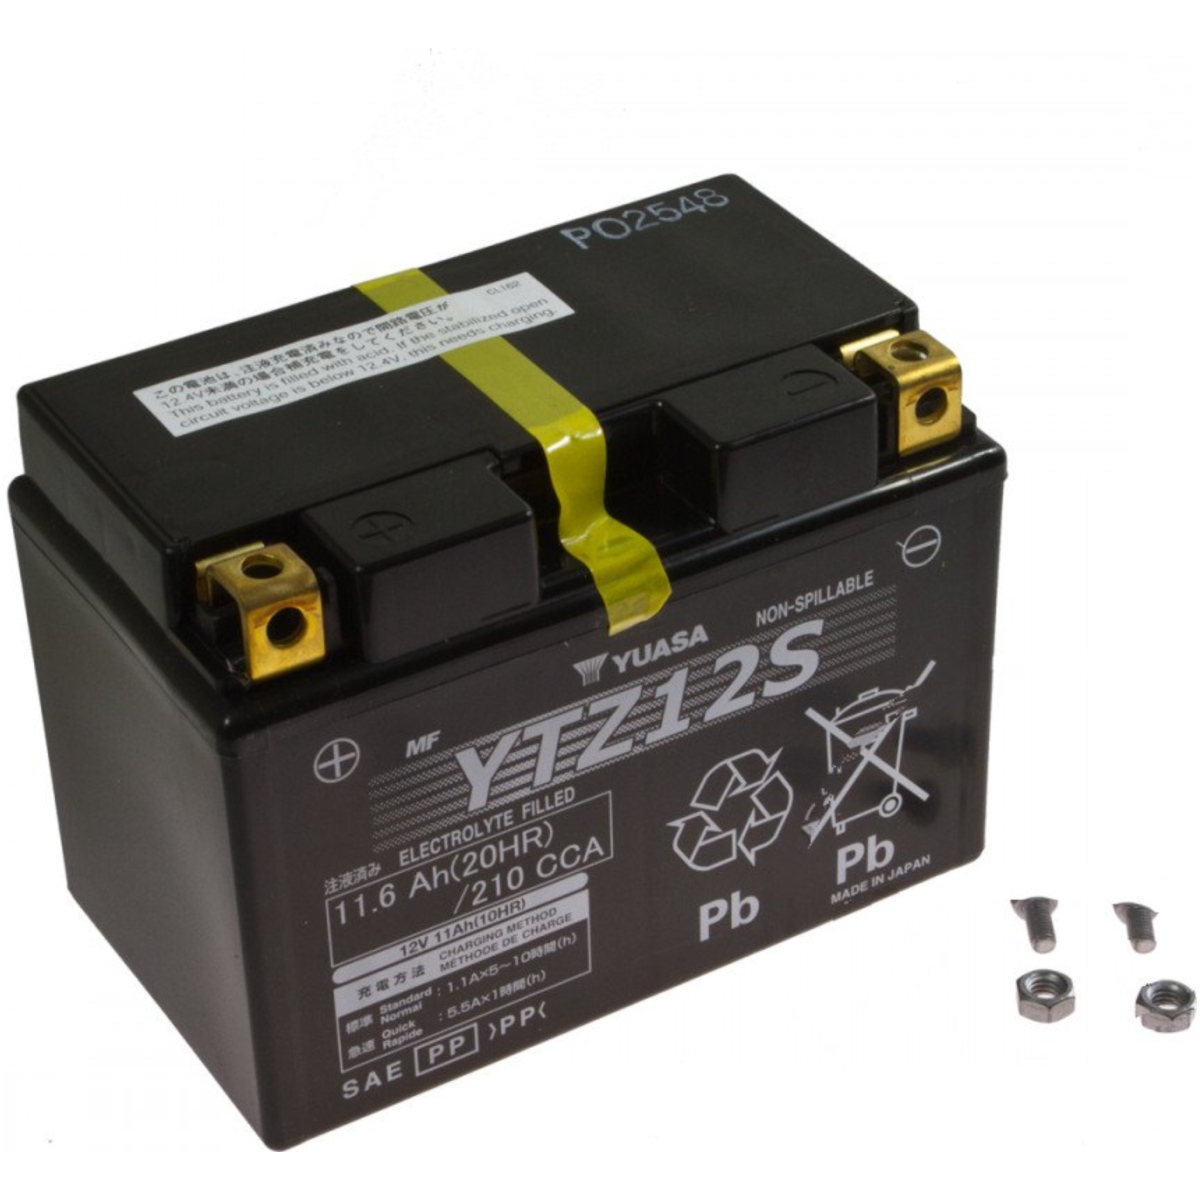 Yuasa ytz12s(wc) motorradbatterie ytz12s wet von Yuasa